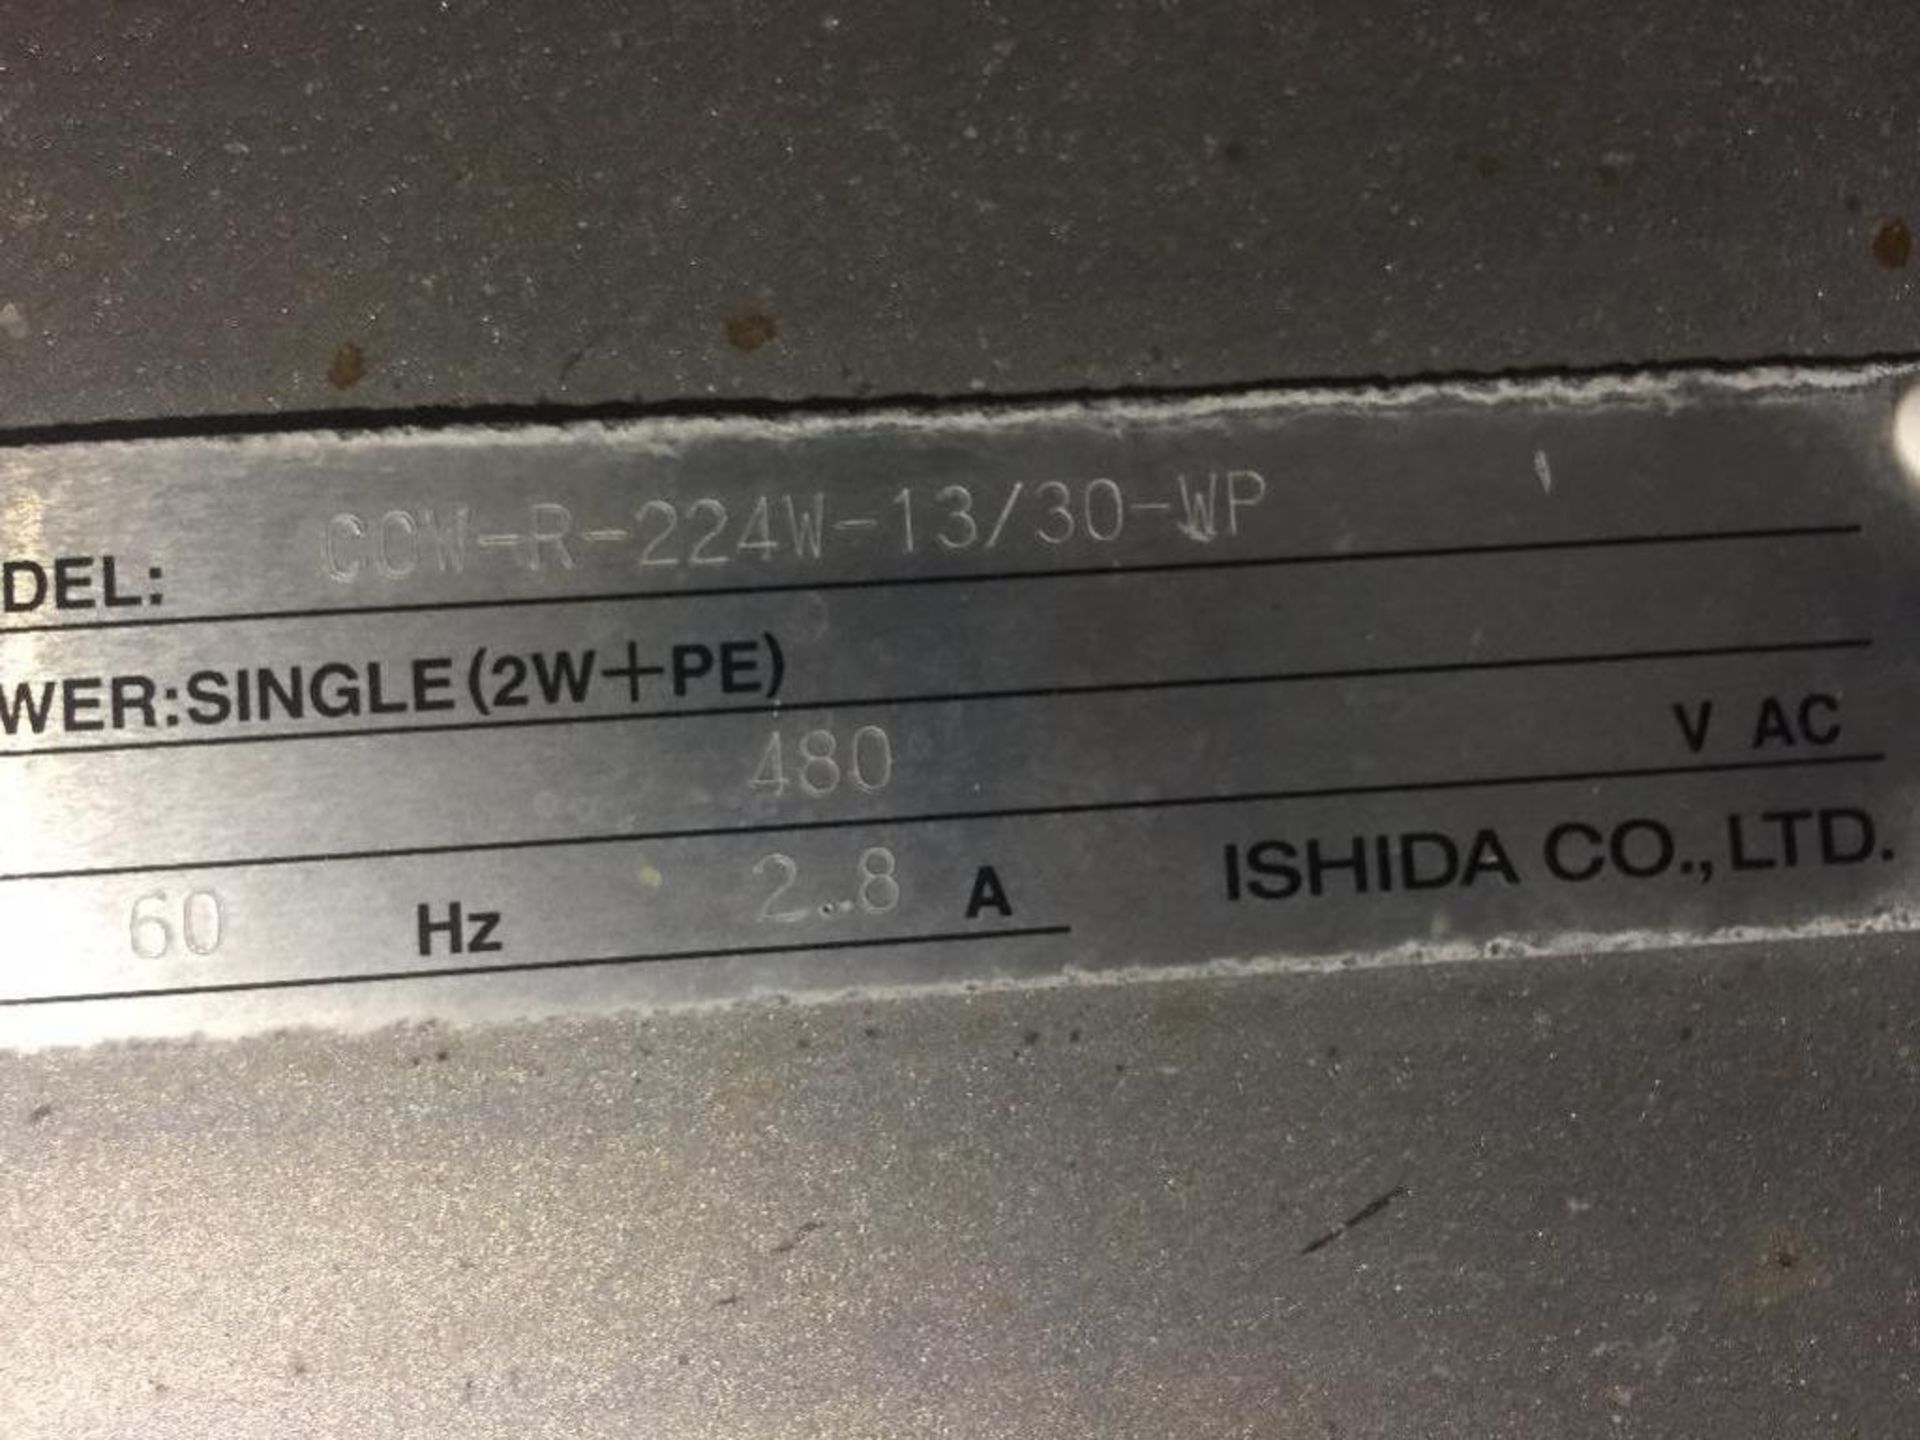 2007 Ishida 24 head scale, Model CCW-R-224W-13/30-WP ** Rigging Fee: $1,500 ** - Image 6 of 19